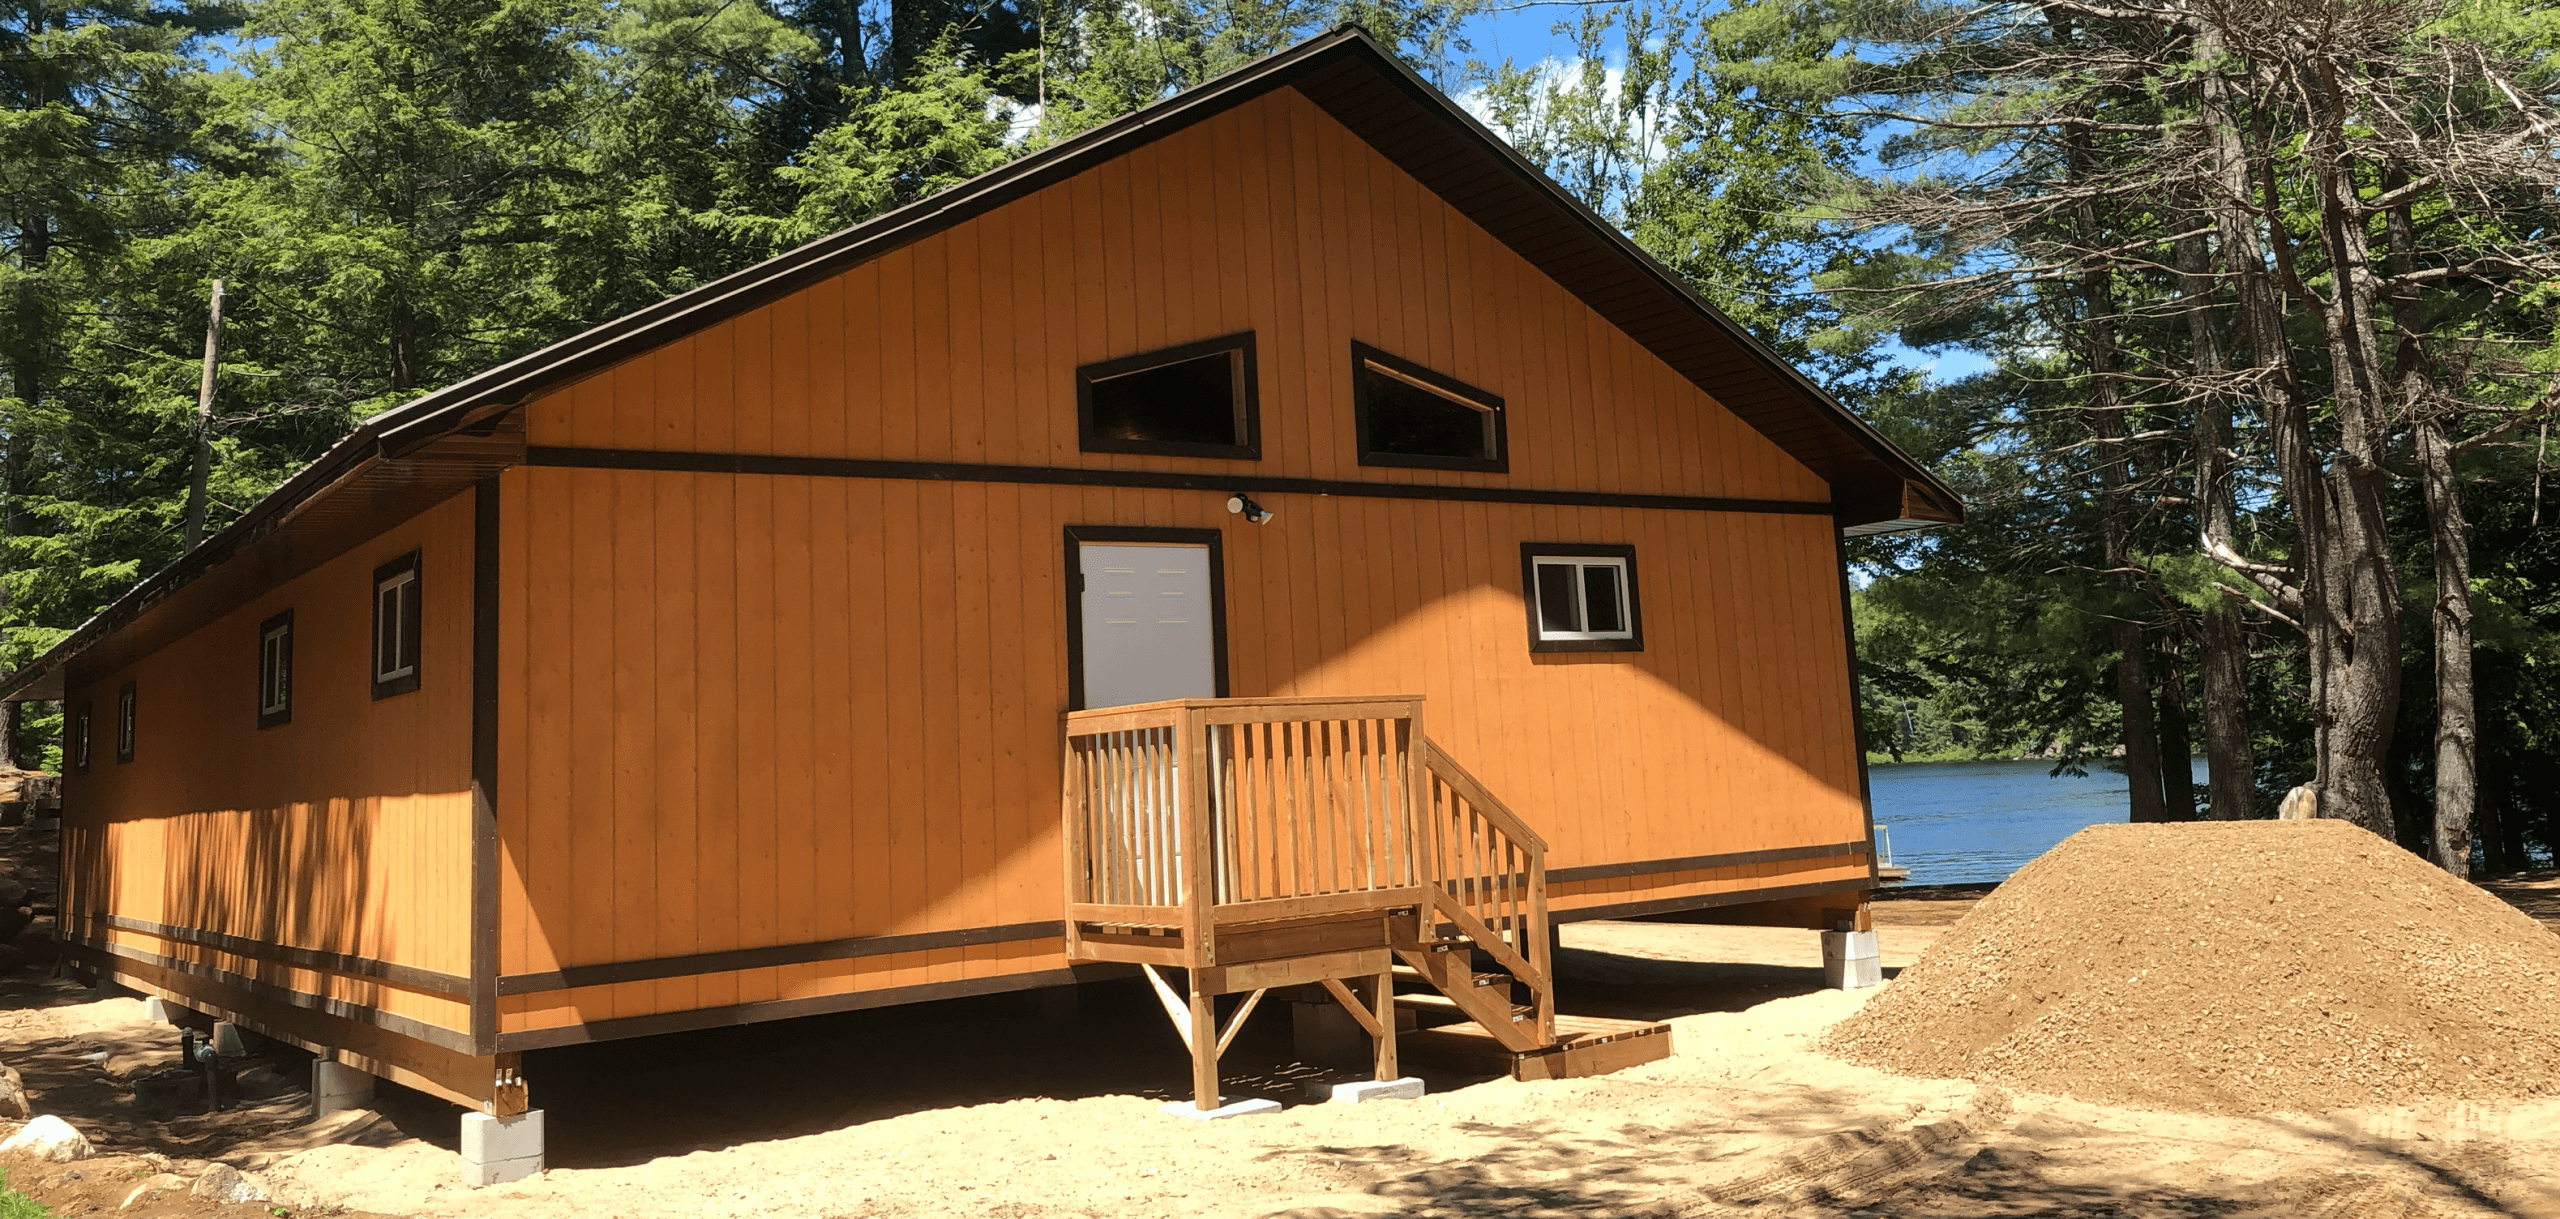 Outside Camp Tamarack cabin